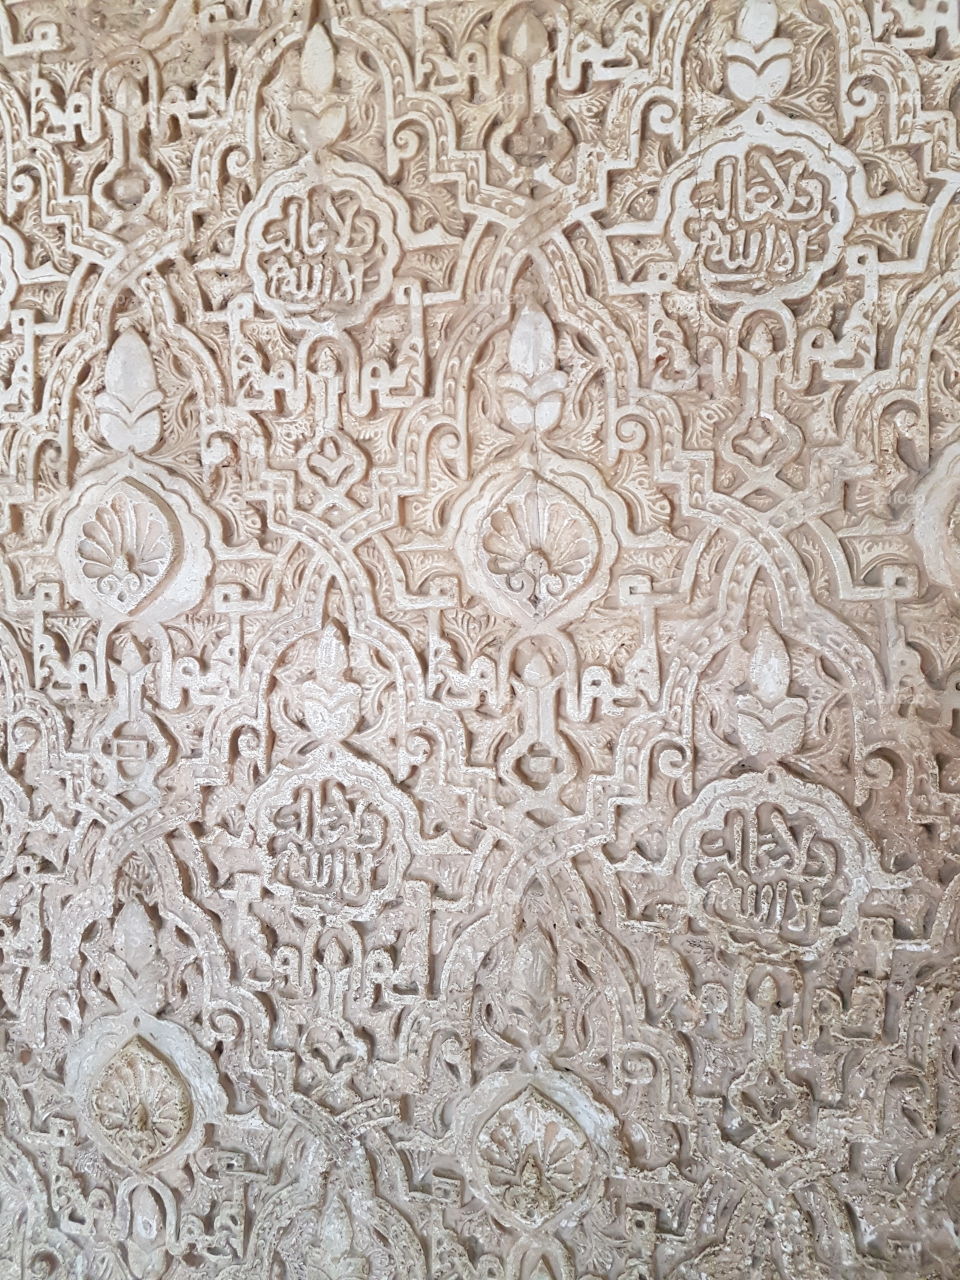 Wall Ceramic Tile in Spanish Moorish Castle